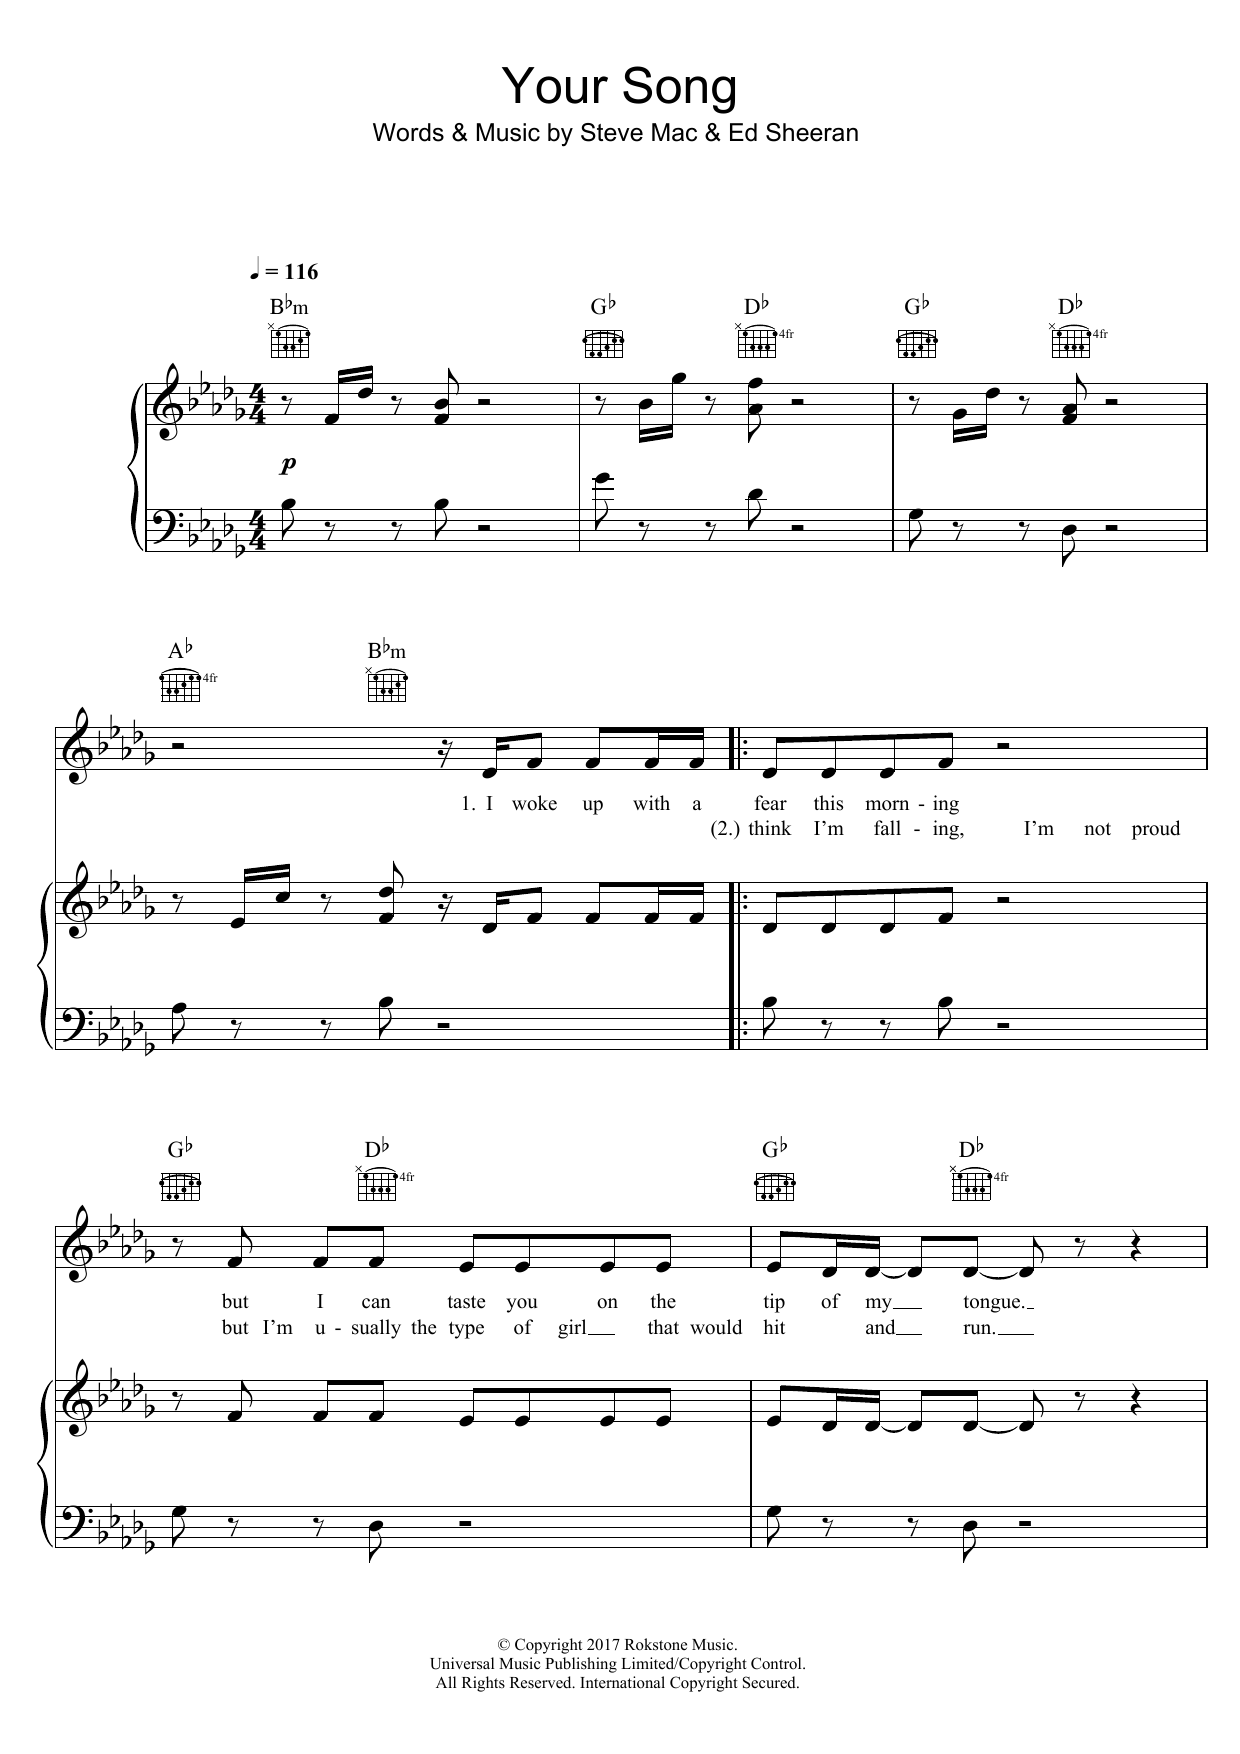 Rita Ora Your Song Sheet Music Notes & Chords for Keyboard - Download or Print PDF